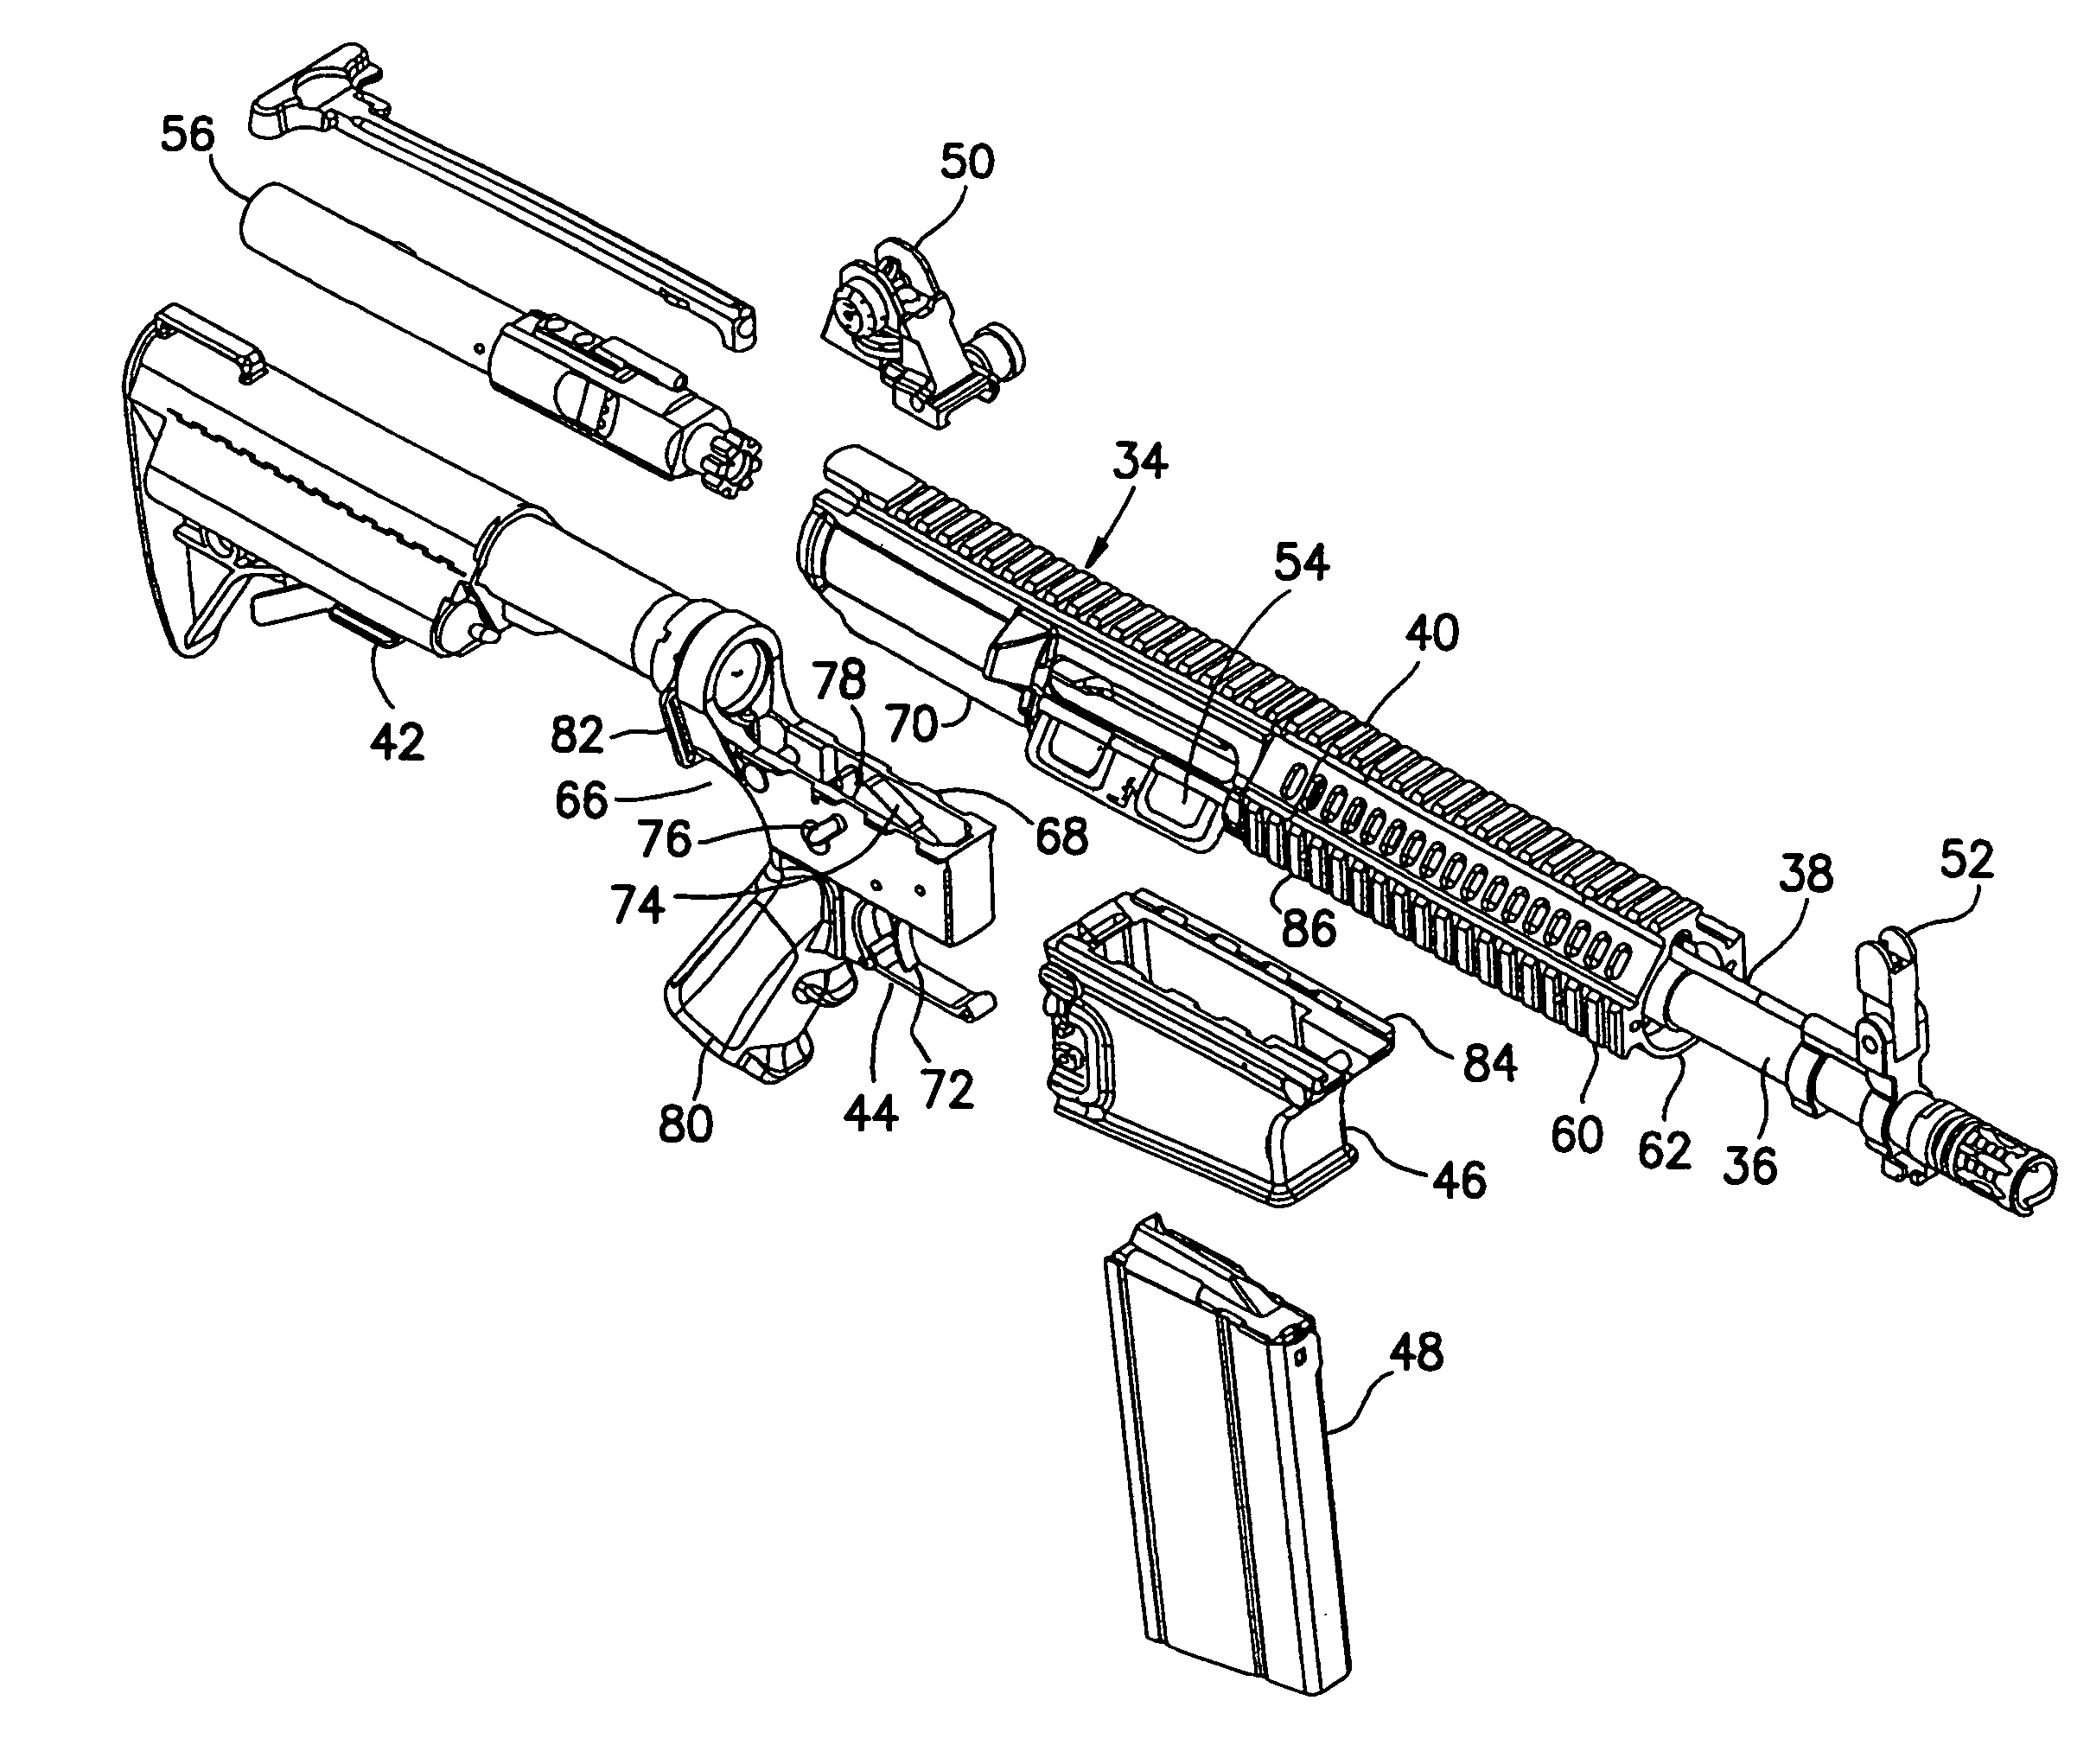 Modular firearm